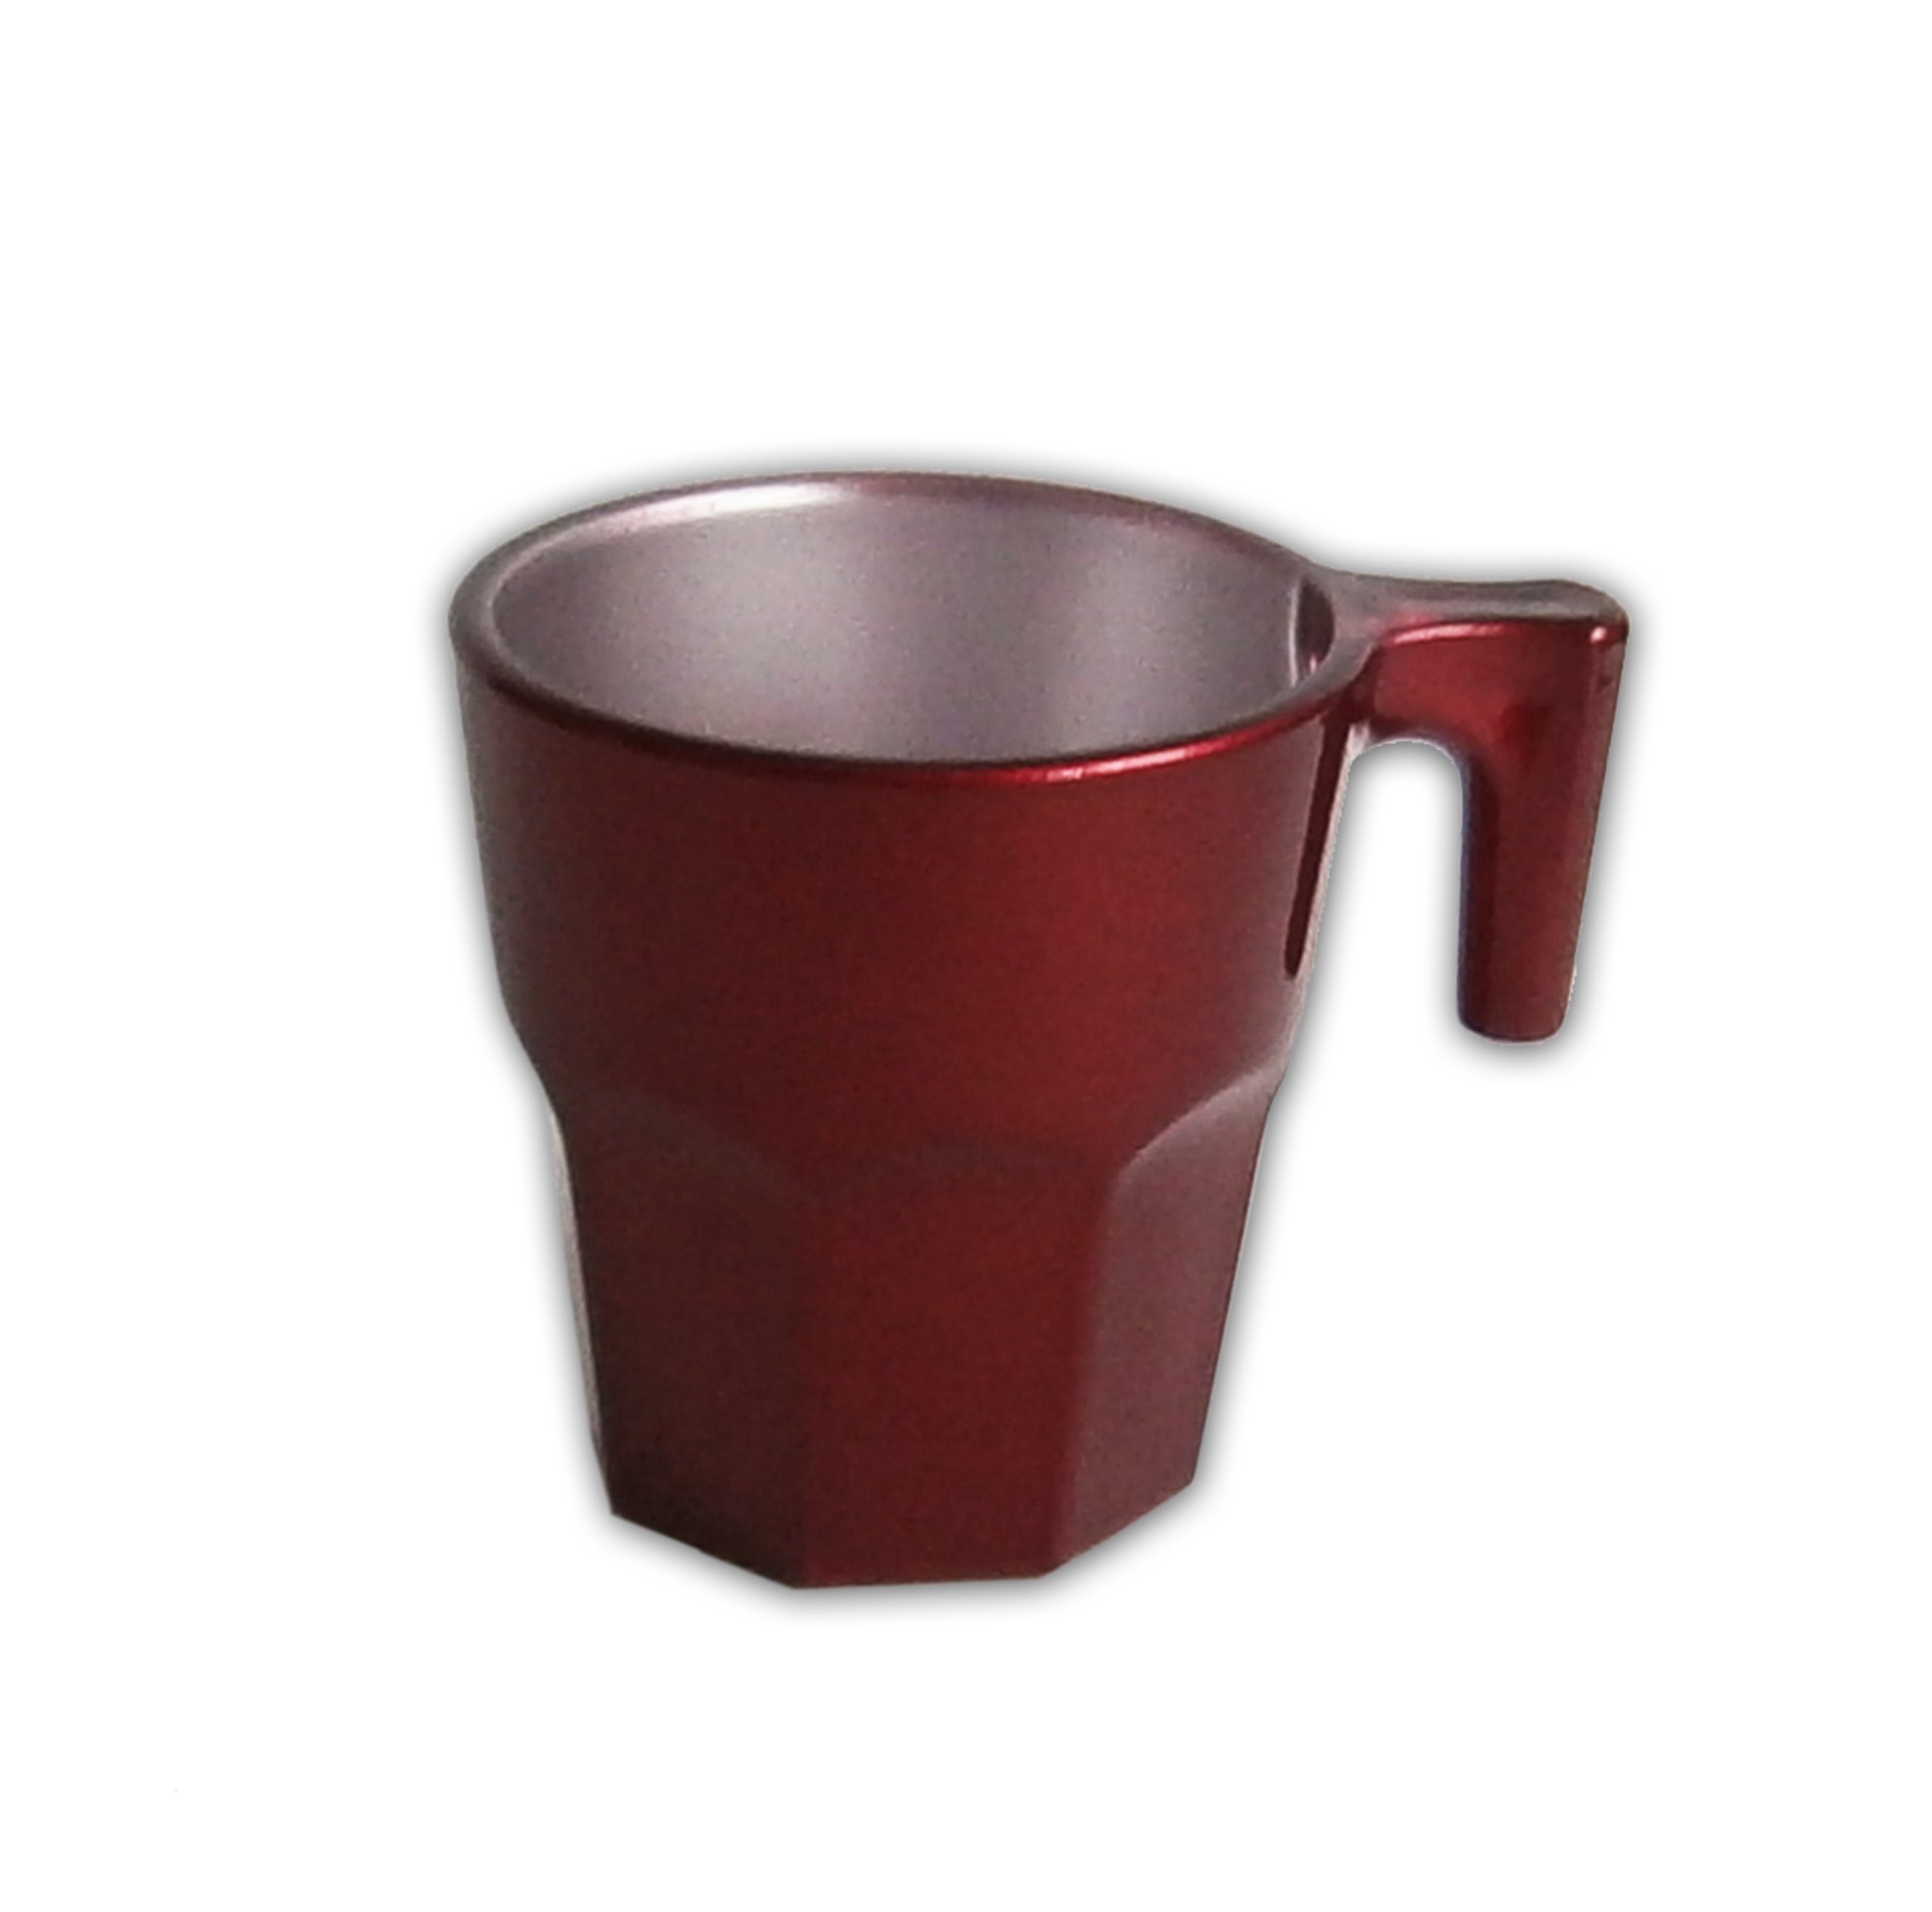 Tasse 4x KAFFEETASSE Casablanca Tasse Tee Kaffeebecher mit Becher Henkel 50 Glas (Dunkelrot-Metallic), Metallic